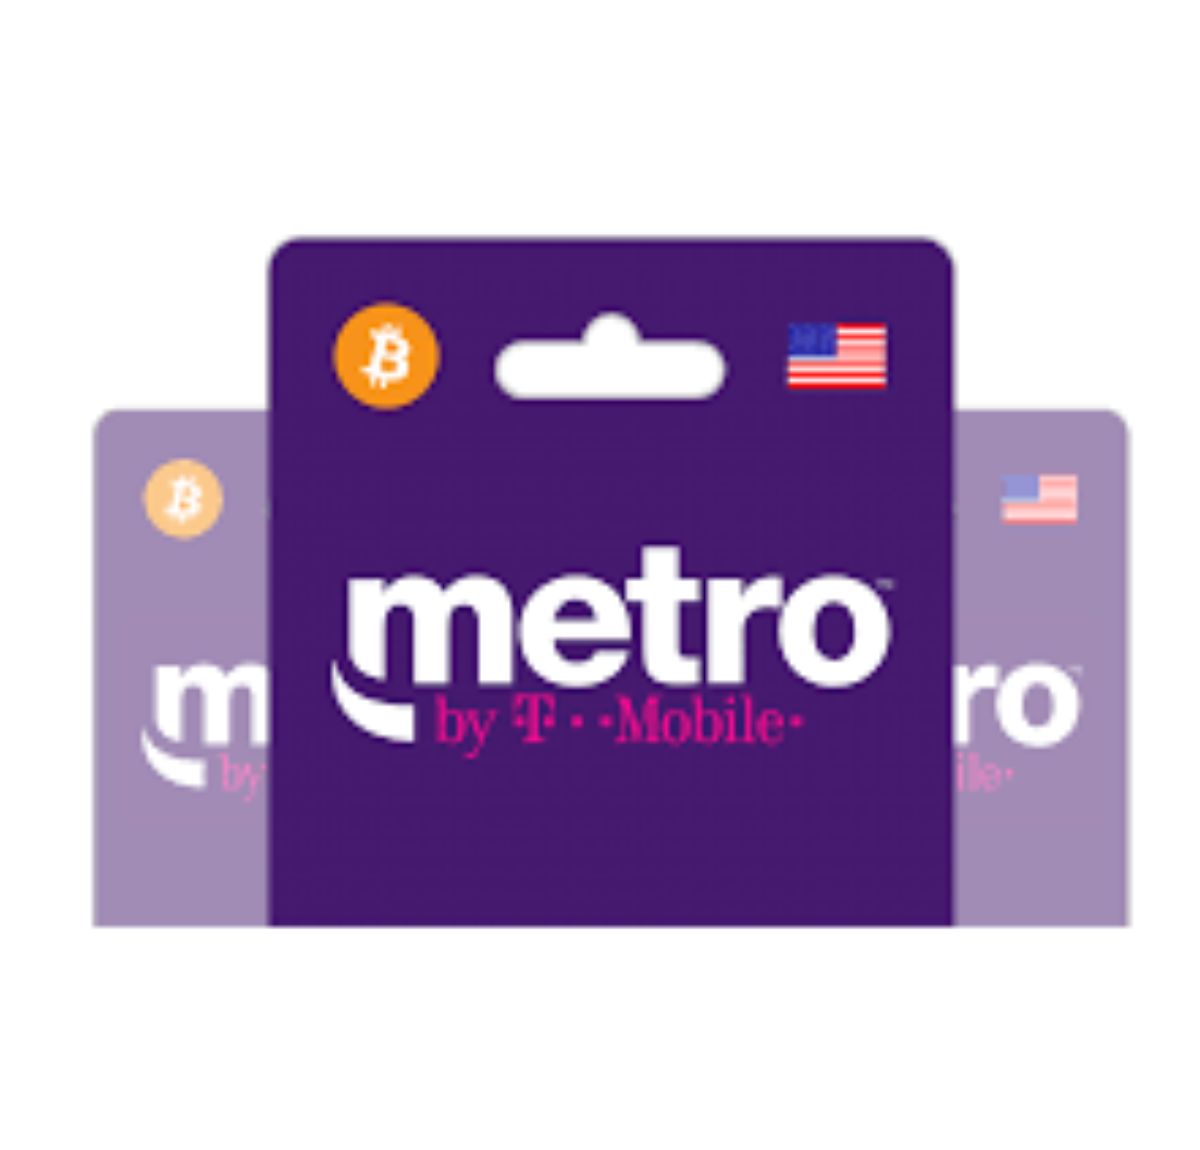 seamless-transfer-switching-sim-cards-on-metro-pcs